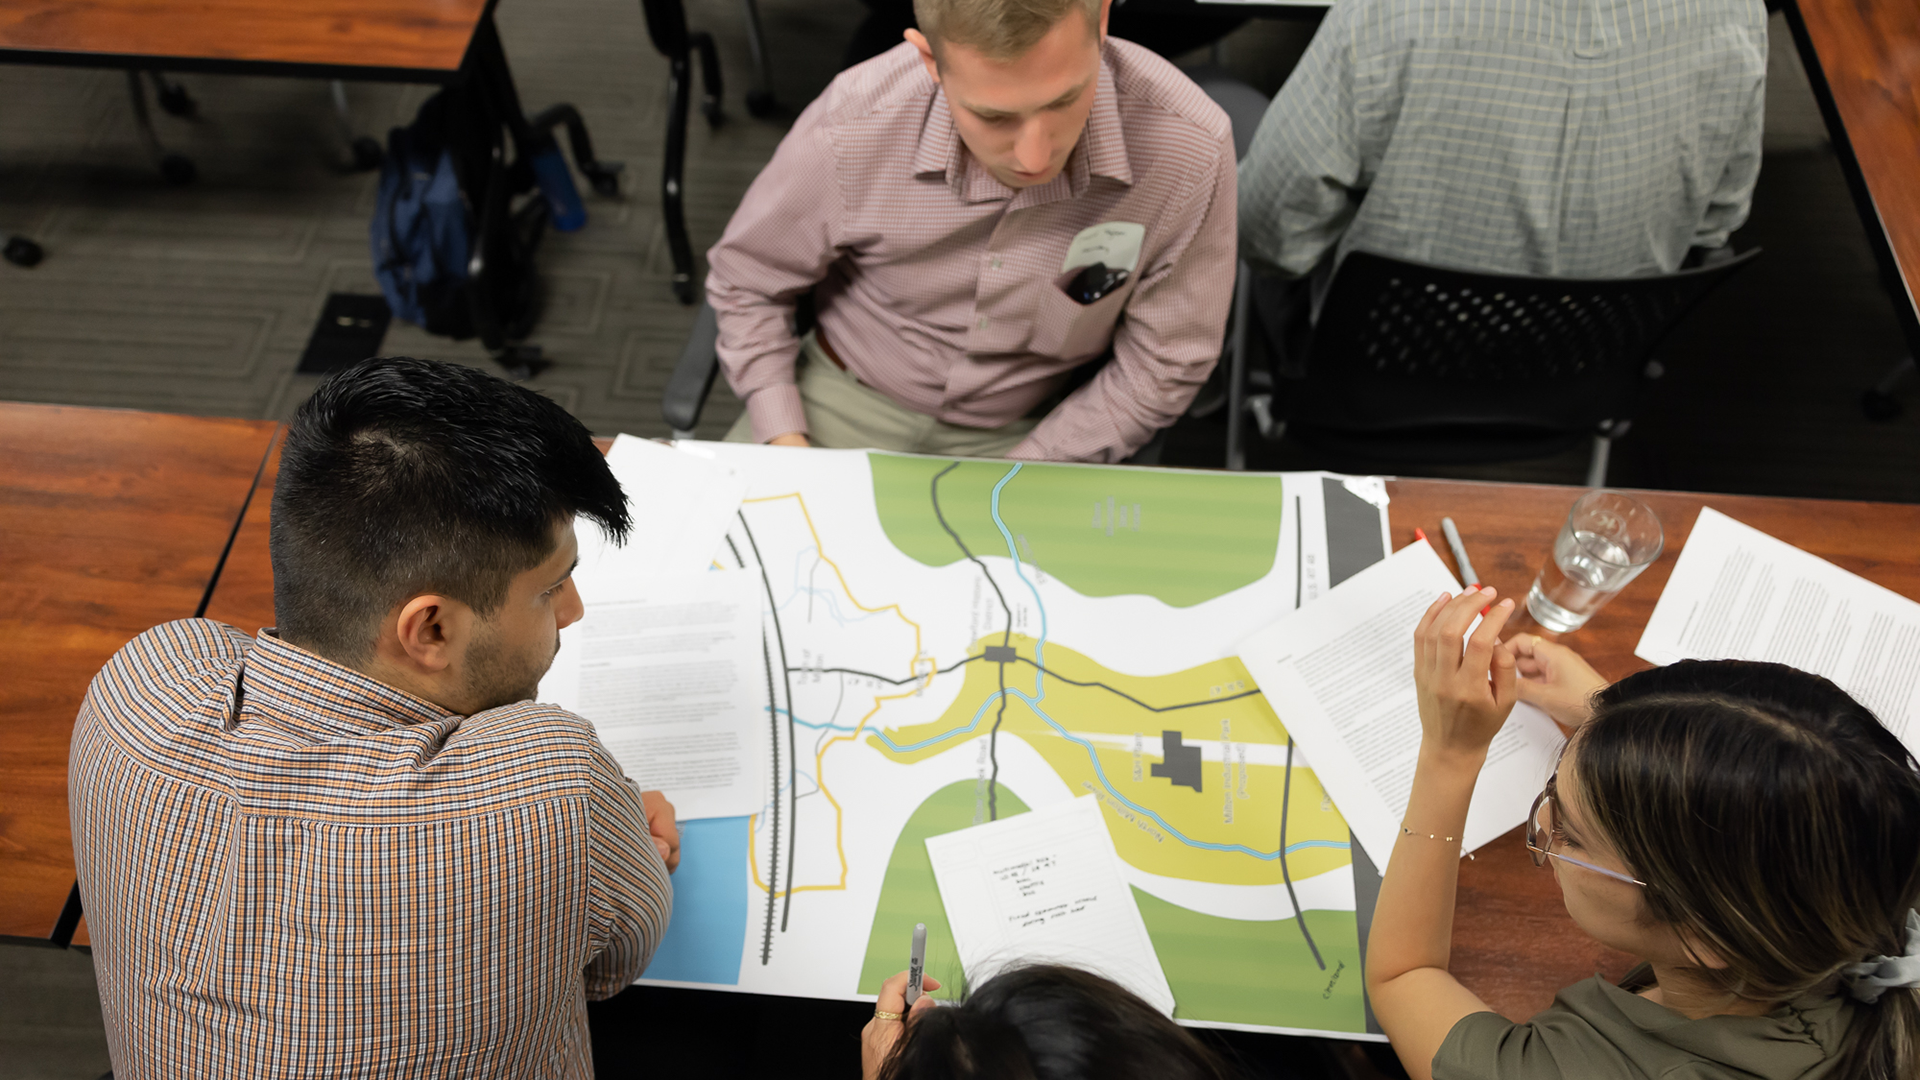 Transportation engineering/planning interns gathered around a map